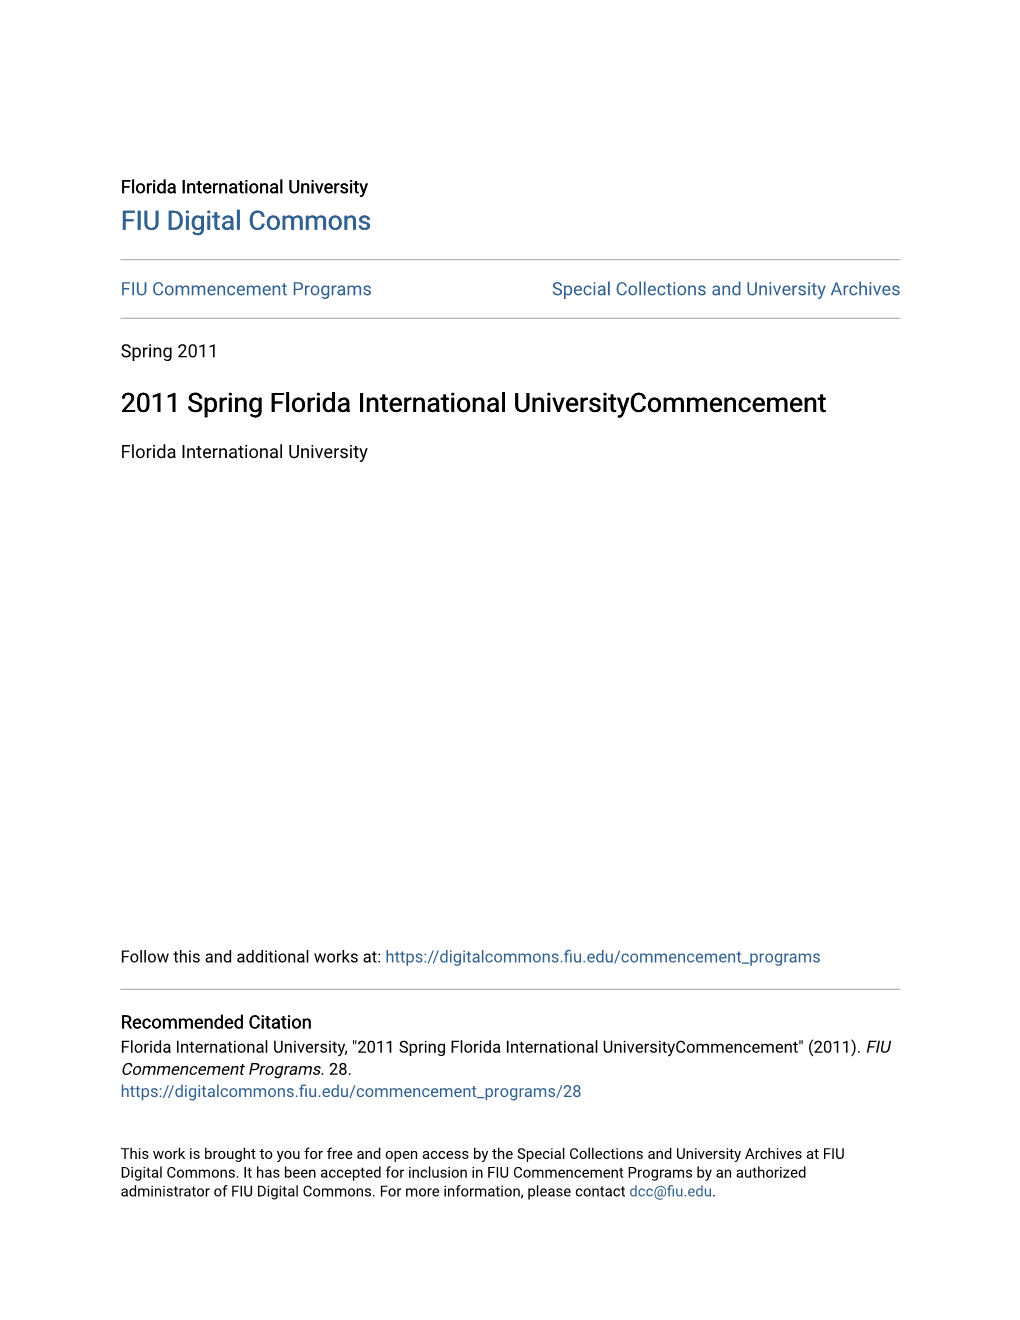 2011 Spring Florida International Universitycommencement